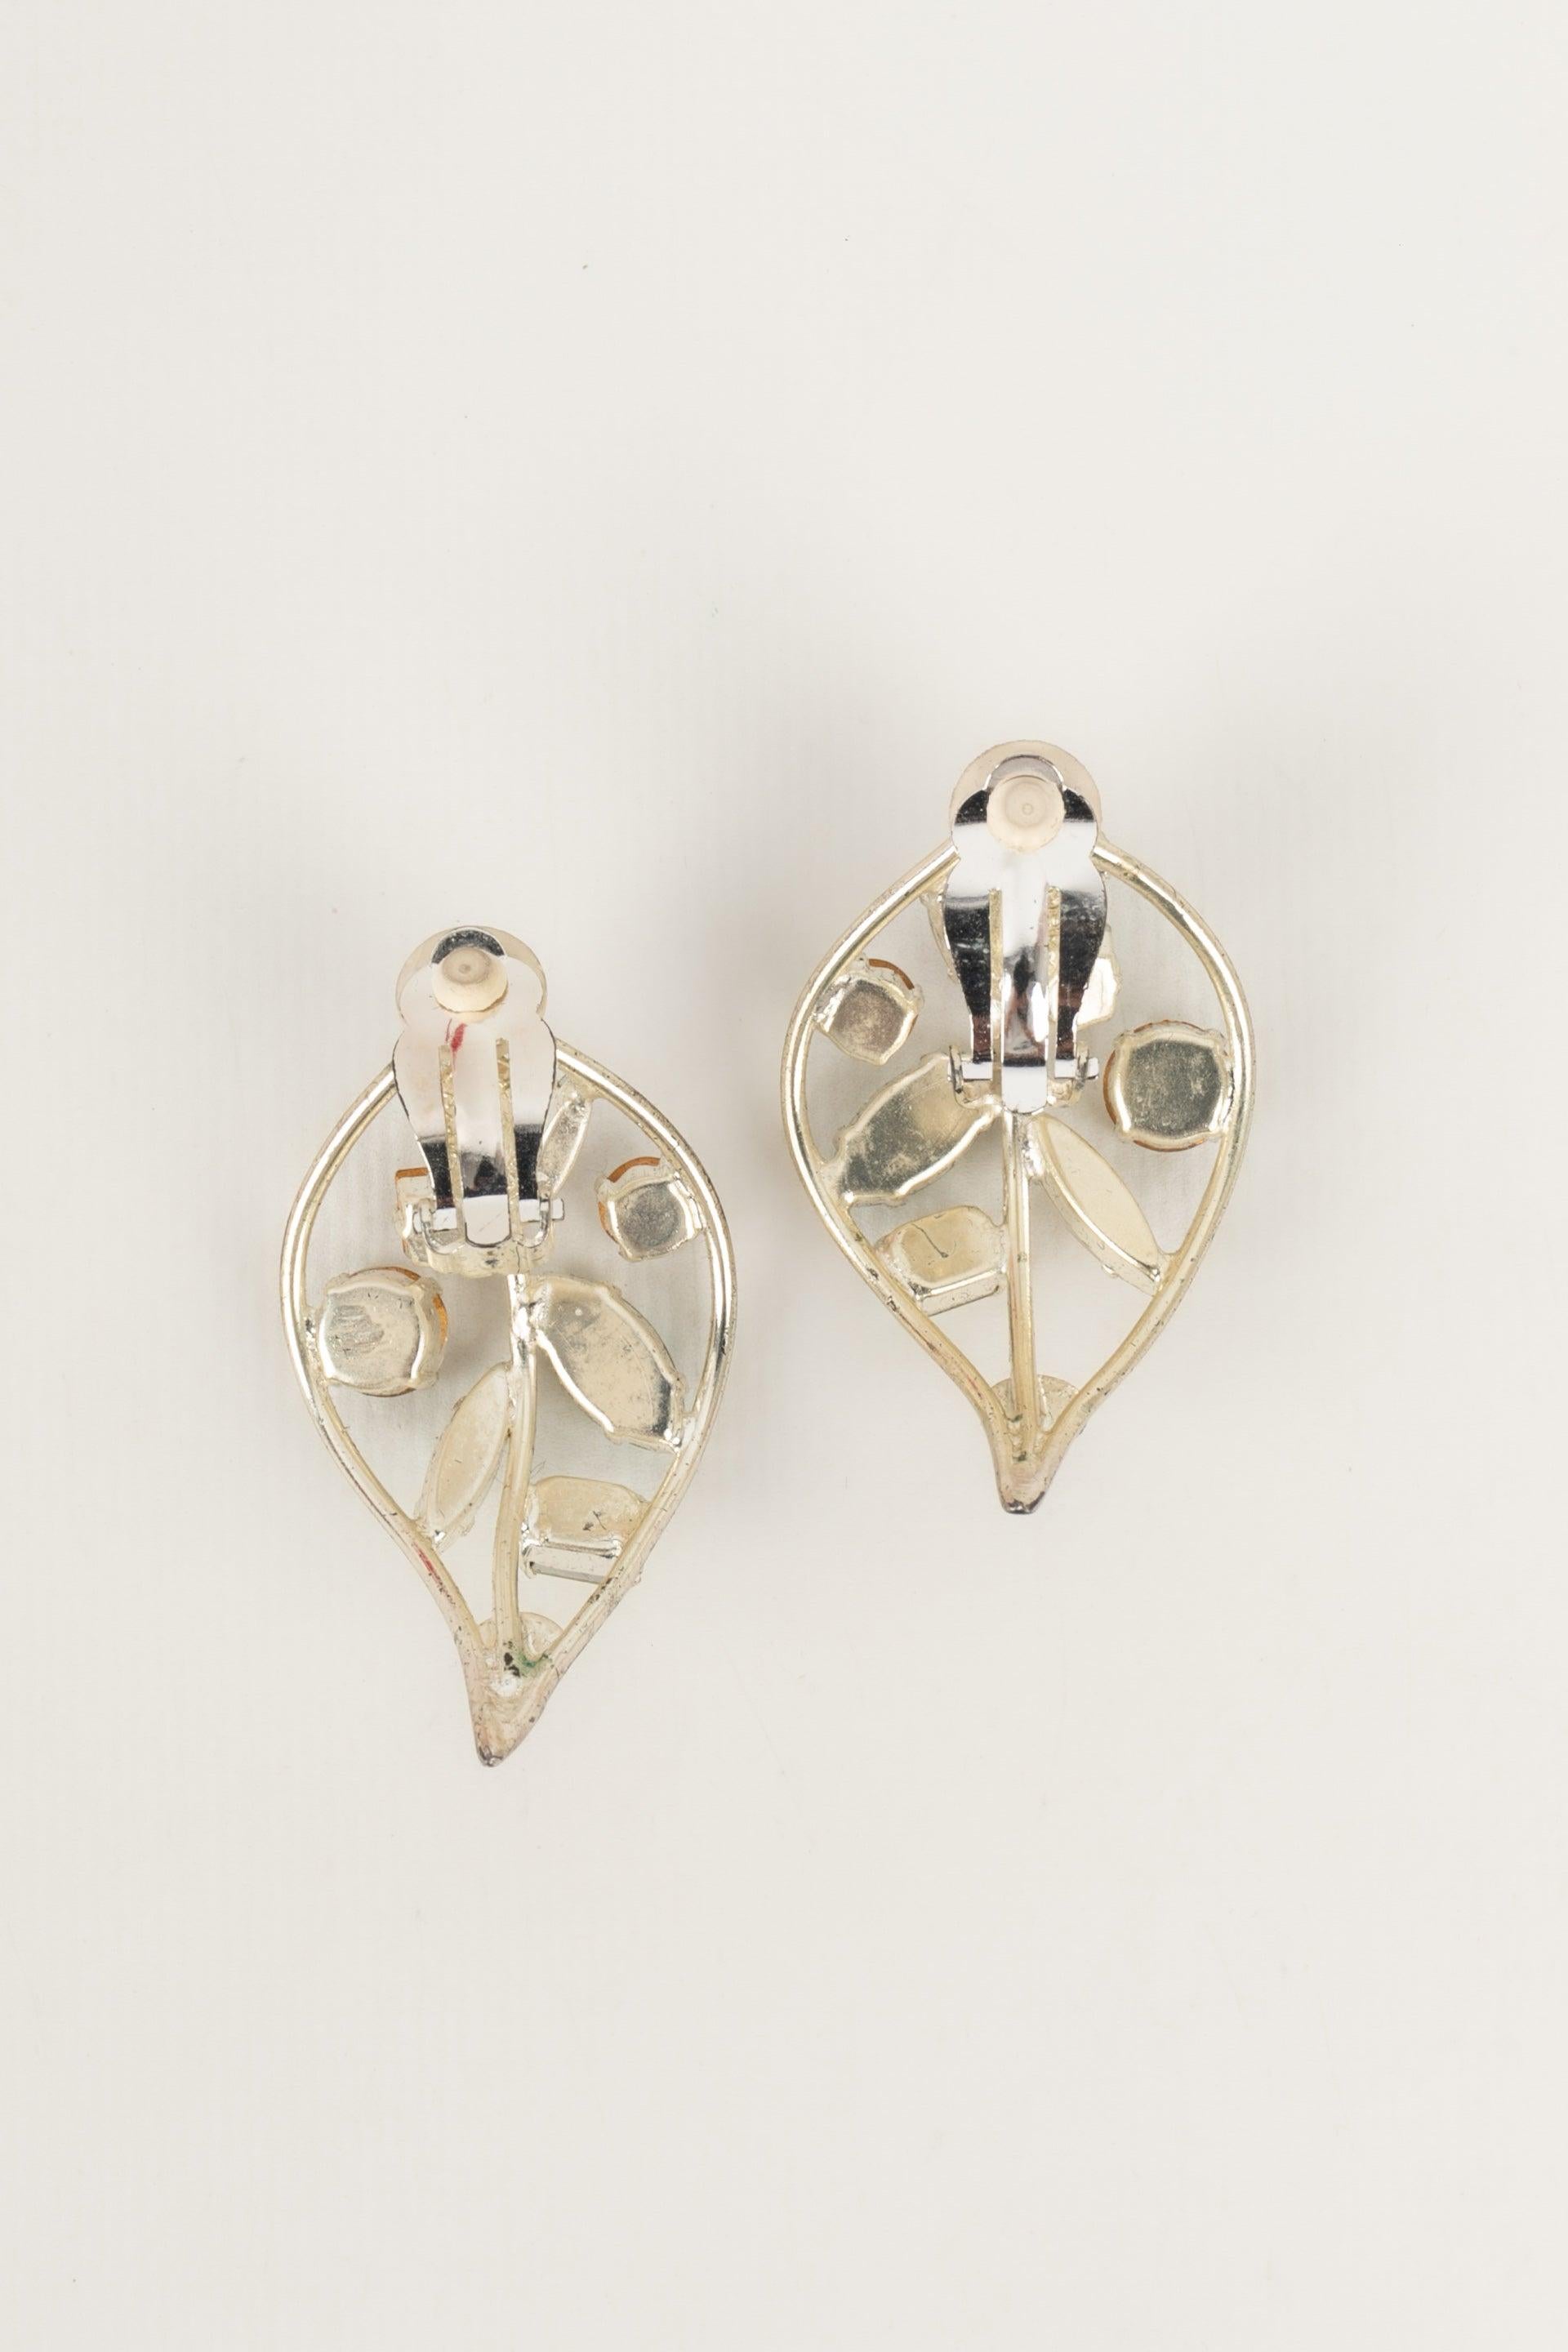 Swarovski Silvery Metal Earrings with Rhinestones For Sale 2